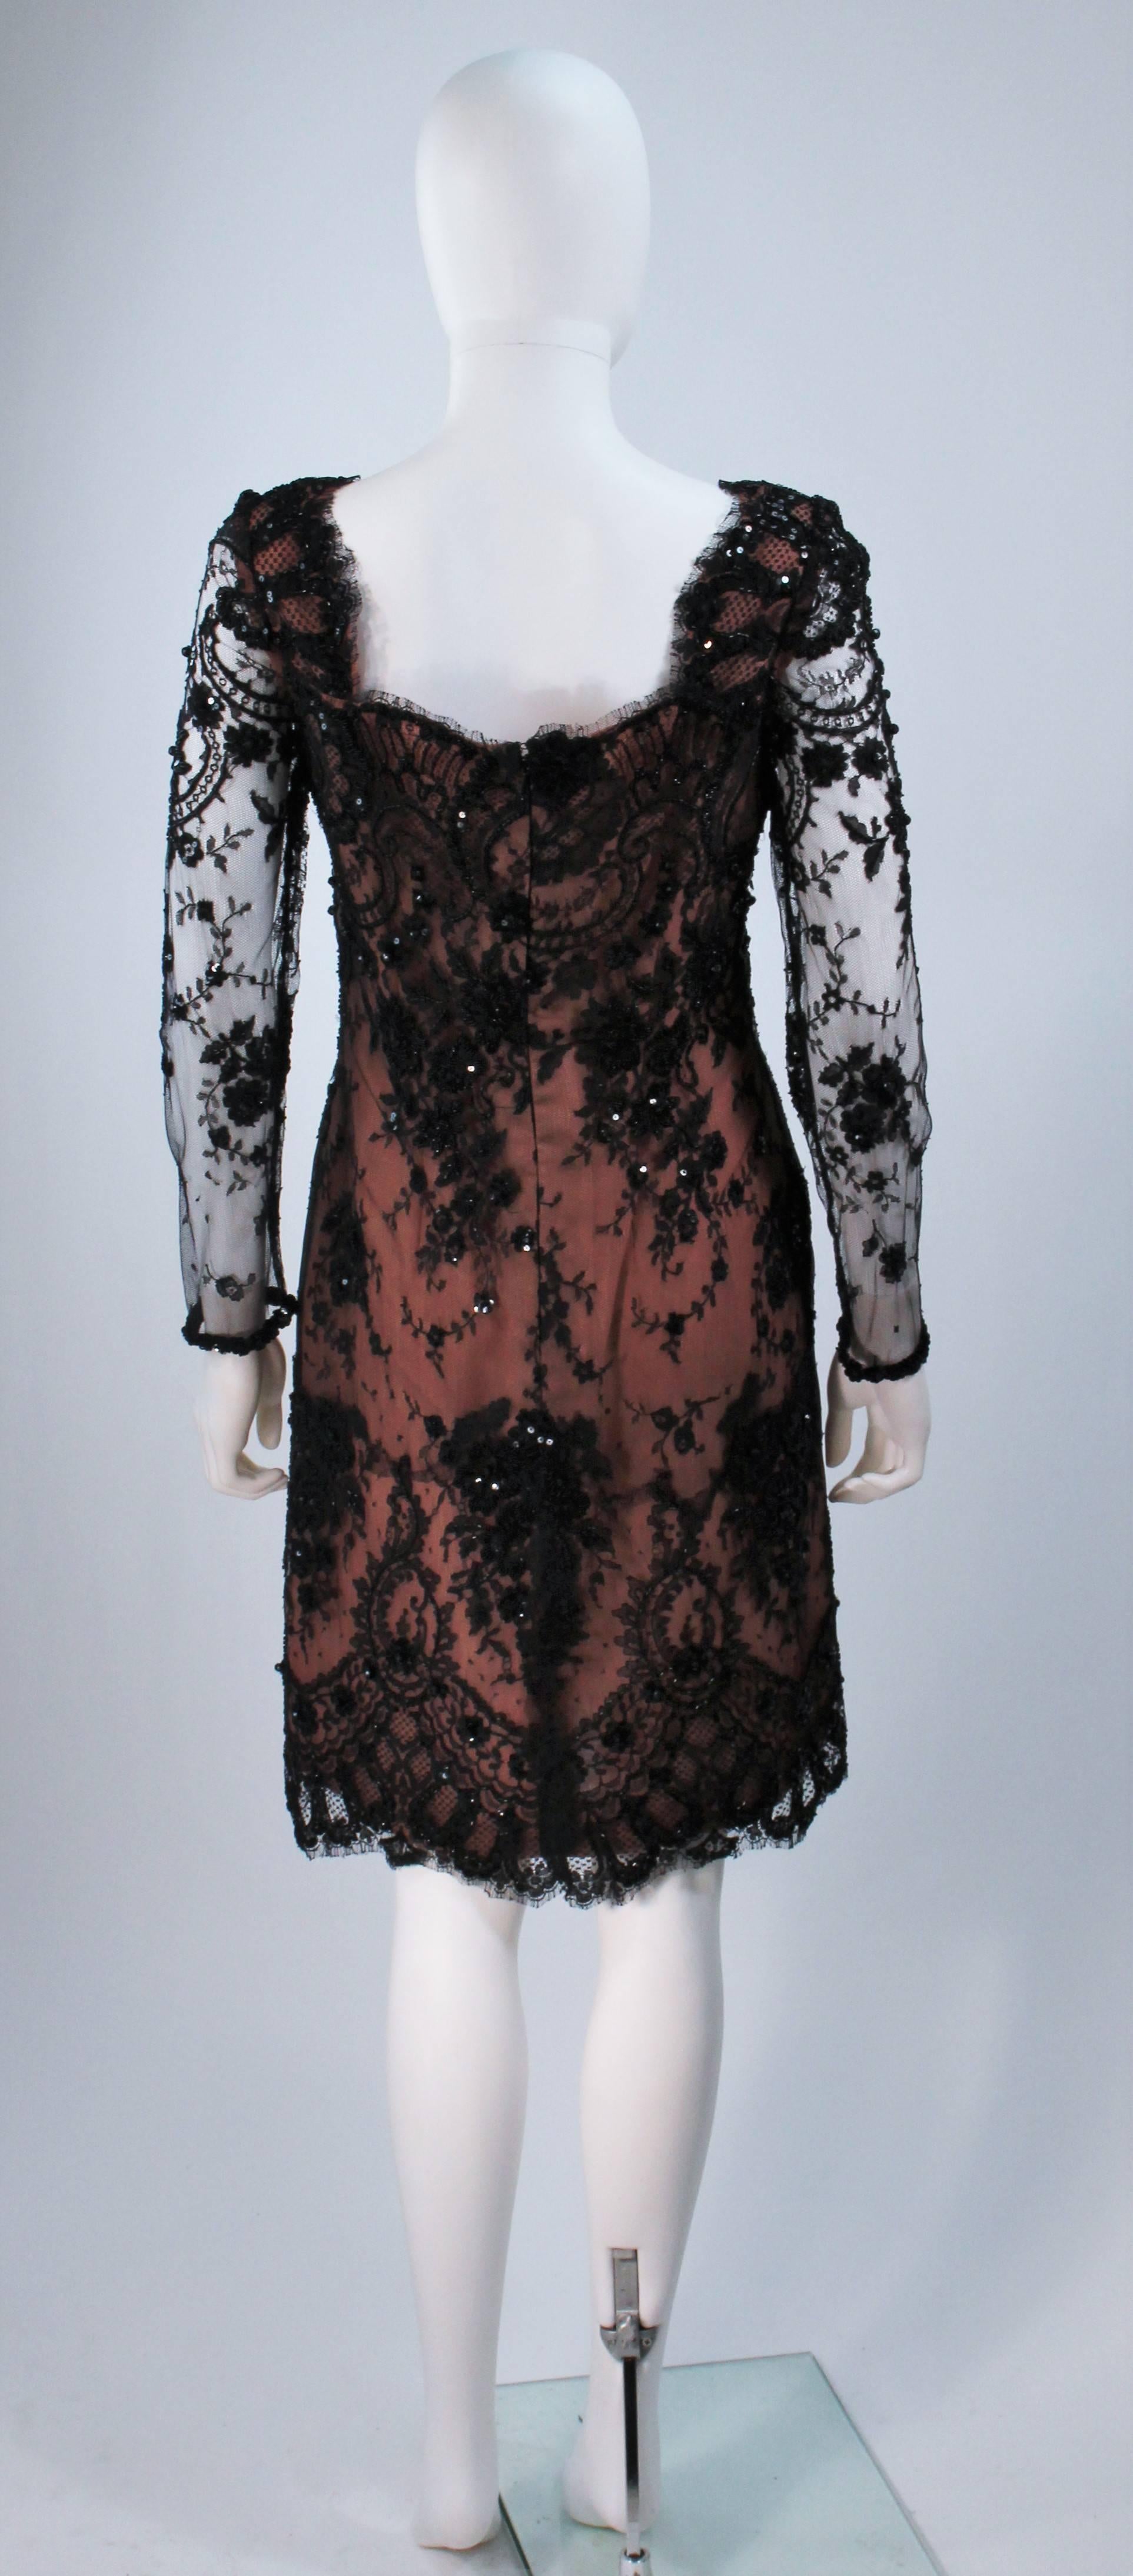 FE ZANDI Black Lace Embellished Cocktail Dress Size 8 For Sale 4